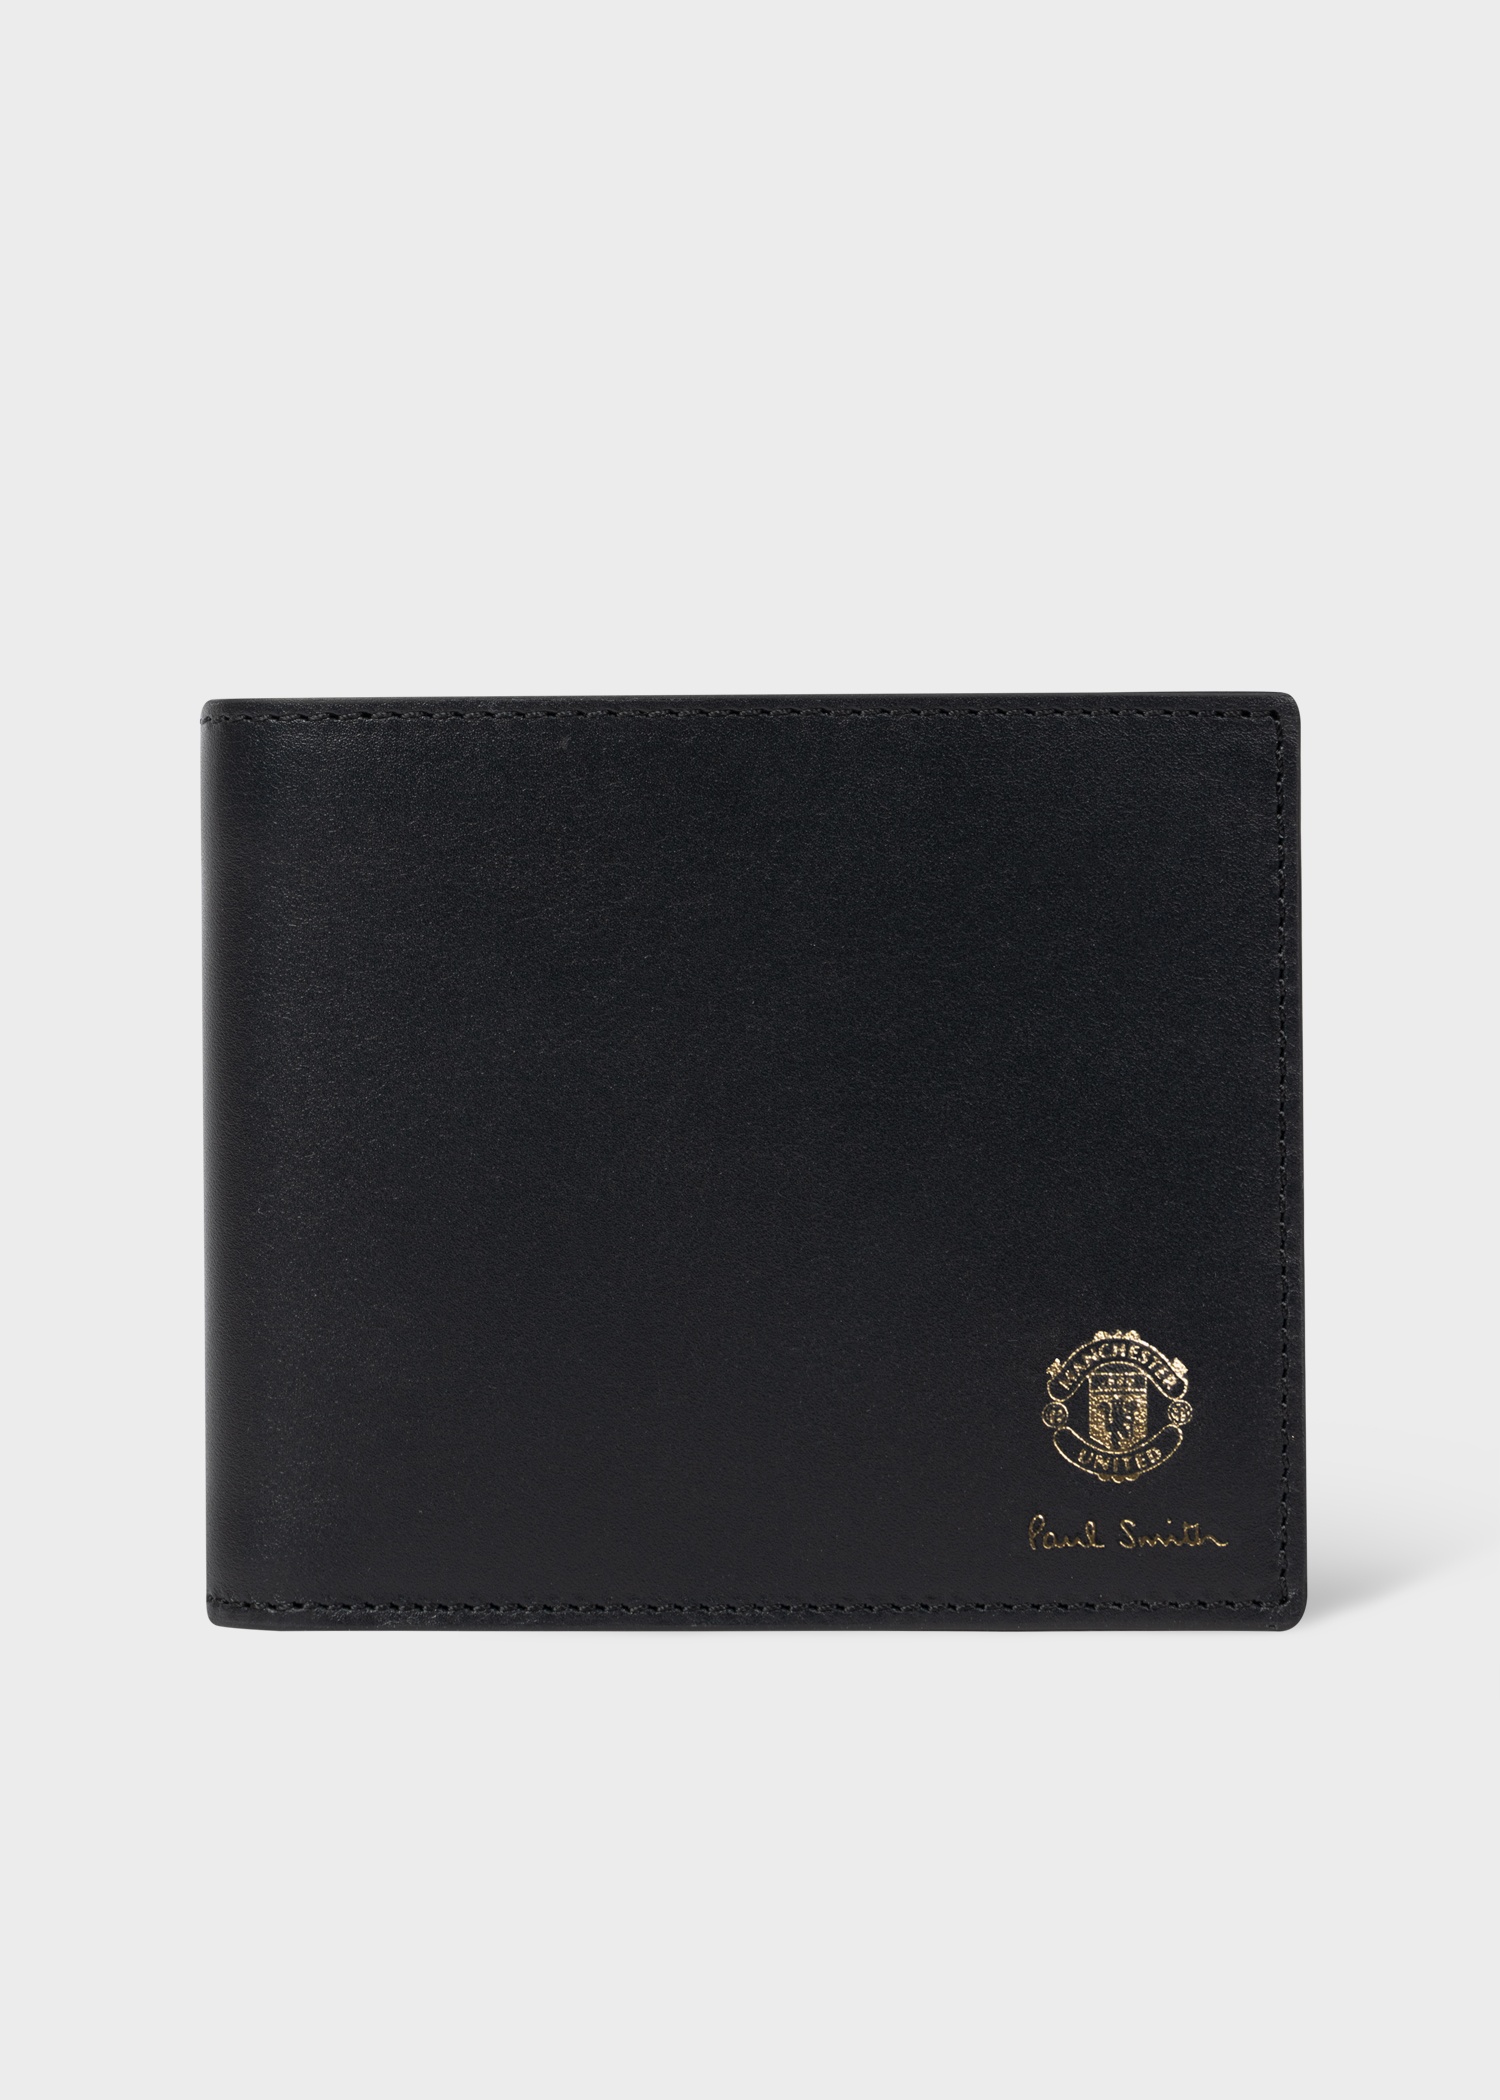 Paul Smith & Manchester United - Black 'Stadium' Billfold Wallet - 1